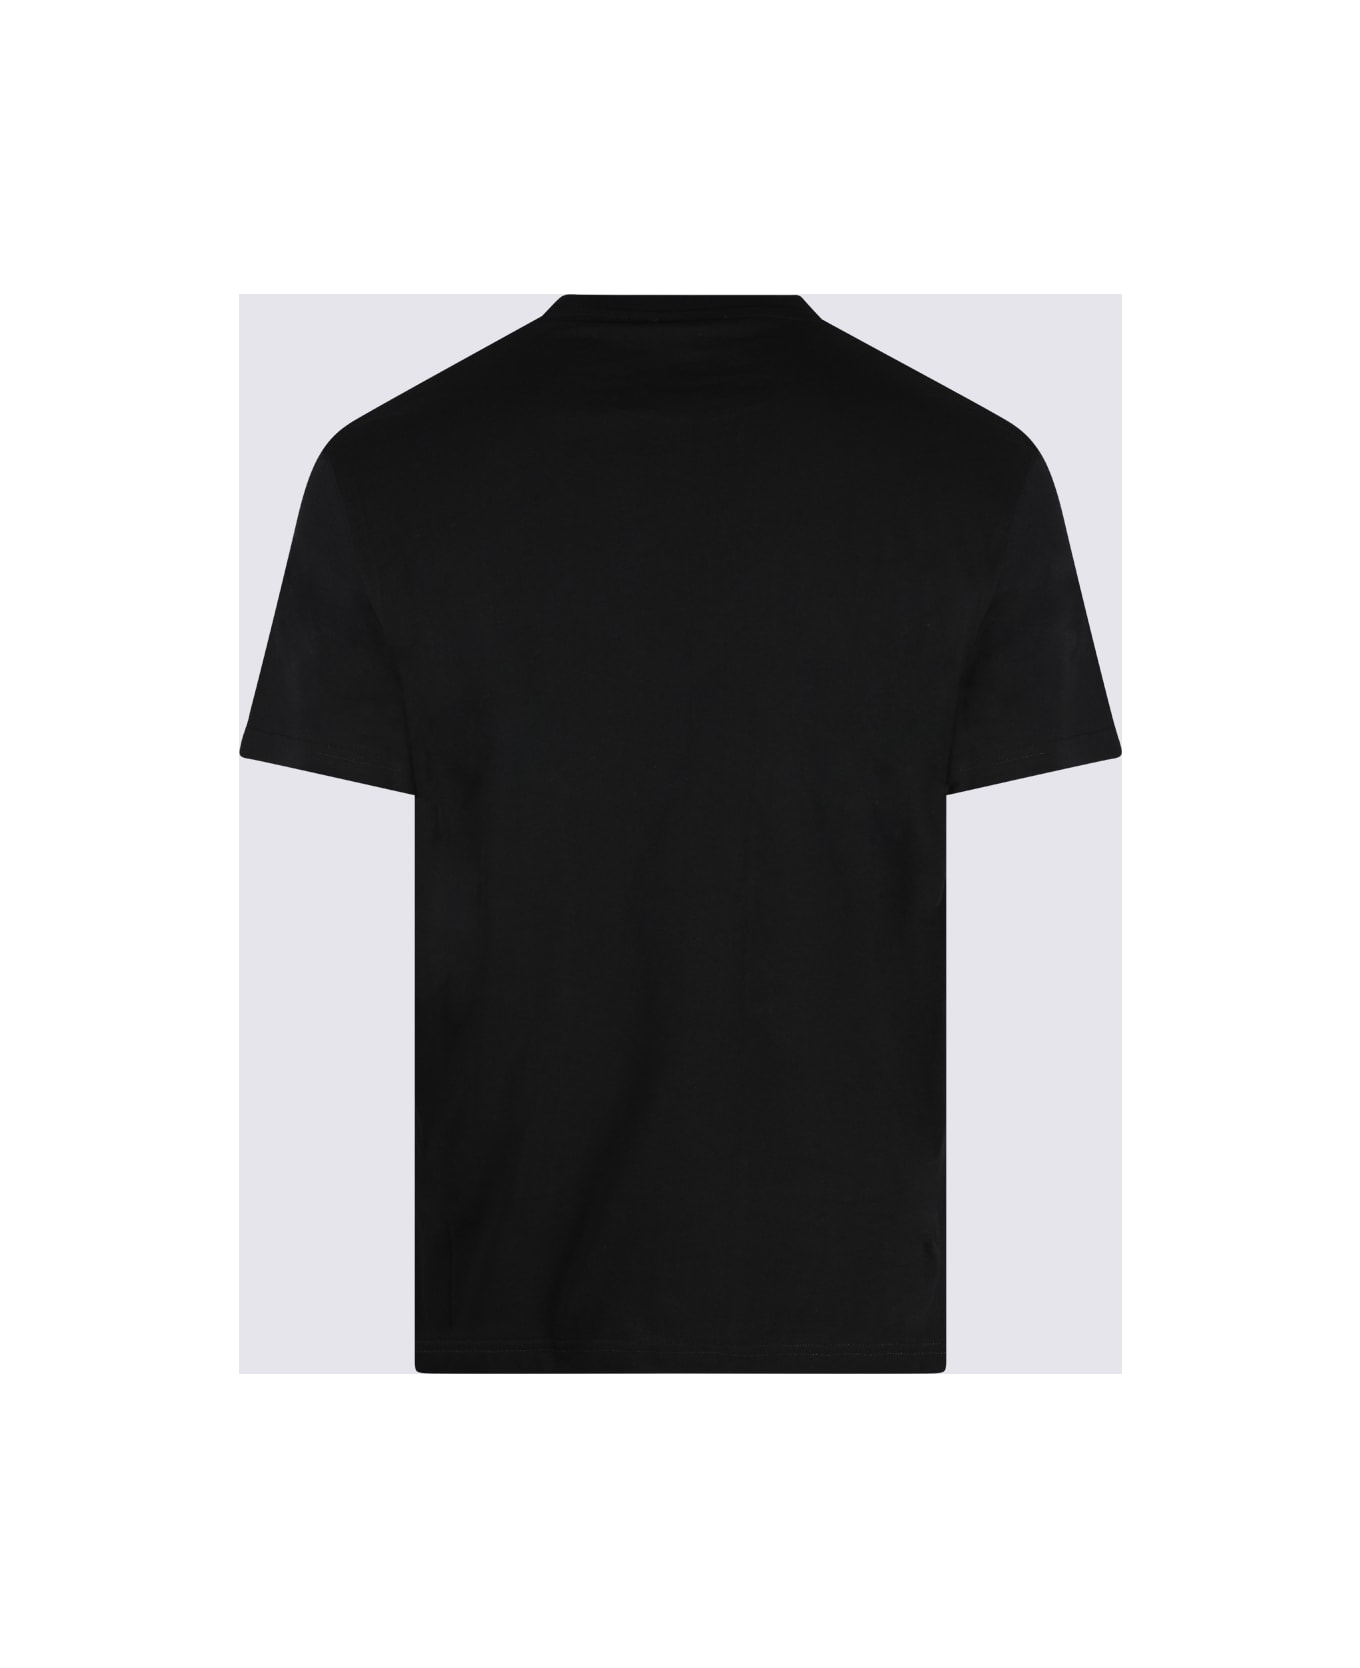 Alexander McQueen Black Cotton T-shirt - BLACK / GREY